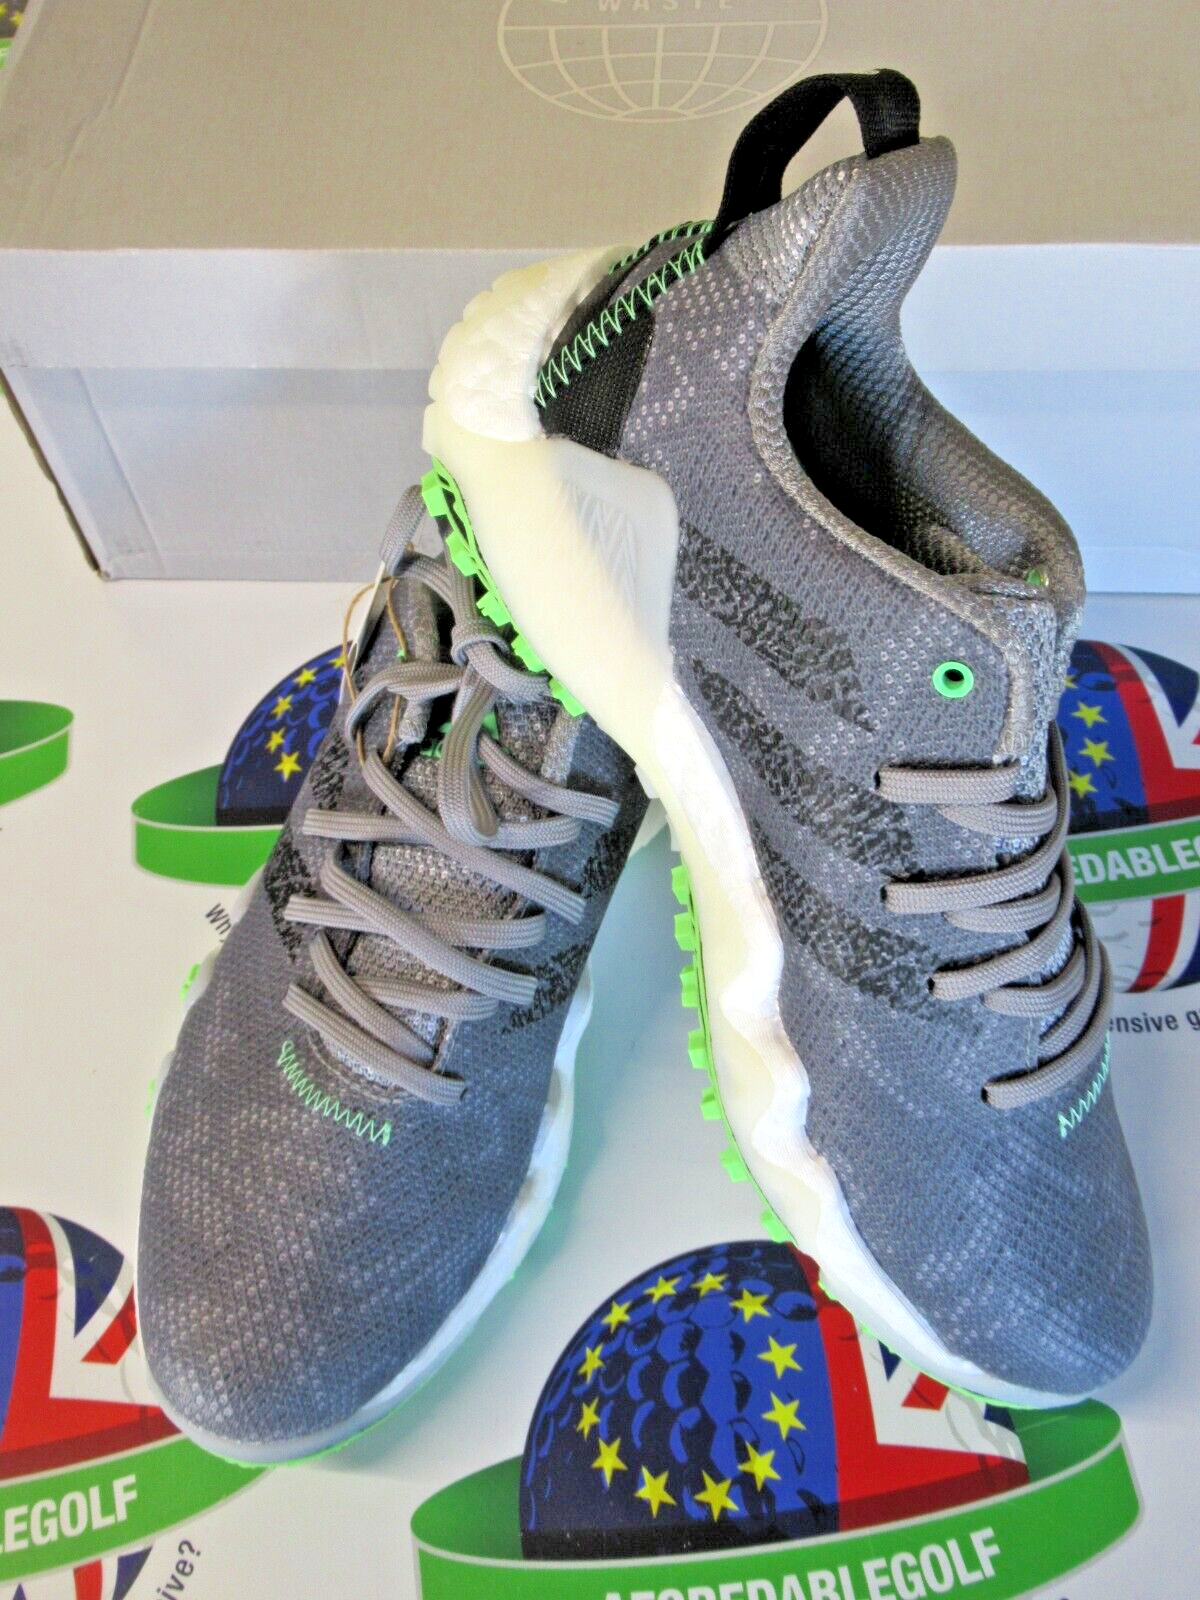 adidas code chaos 22 waterproof golf shoes grey/black/green uk size 6.5 medium